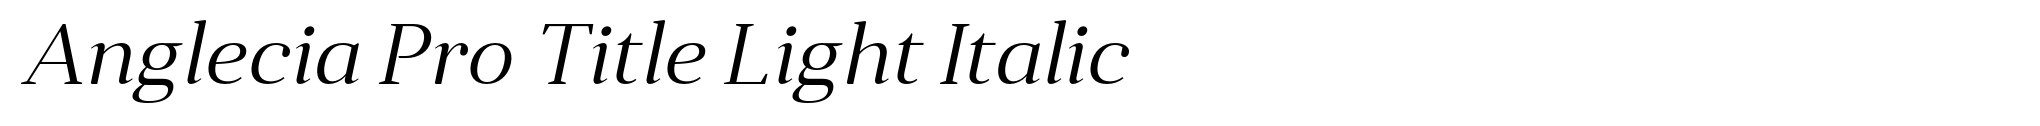 Anglecia Pro Title Light Italic image